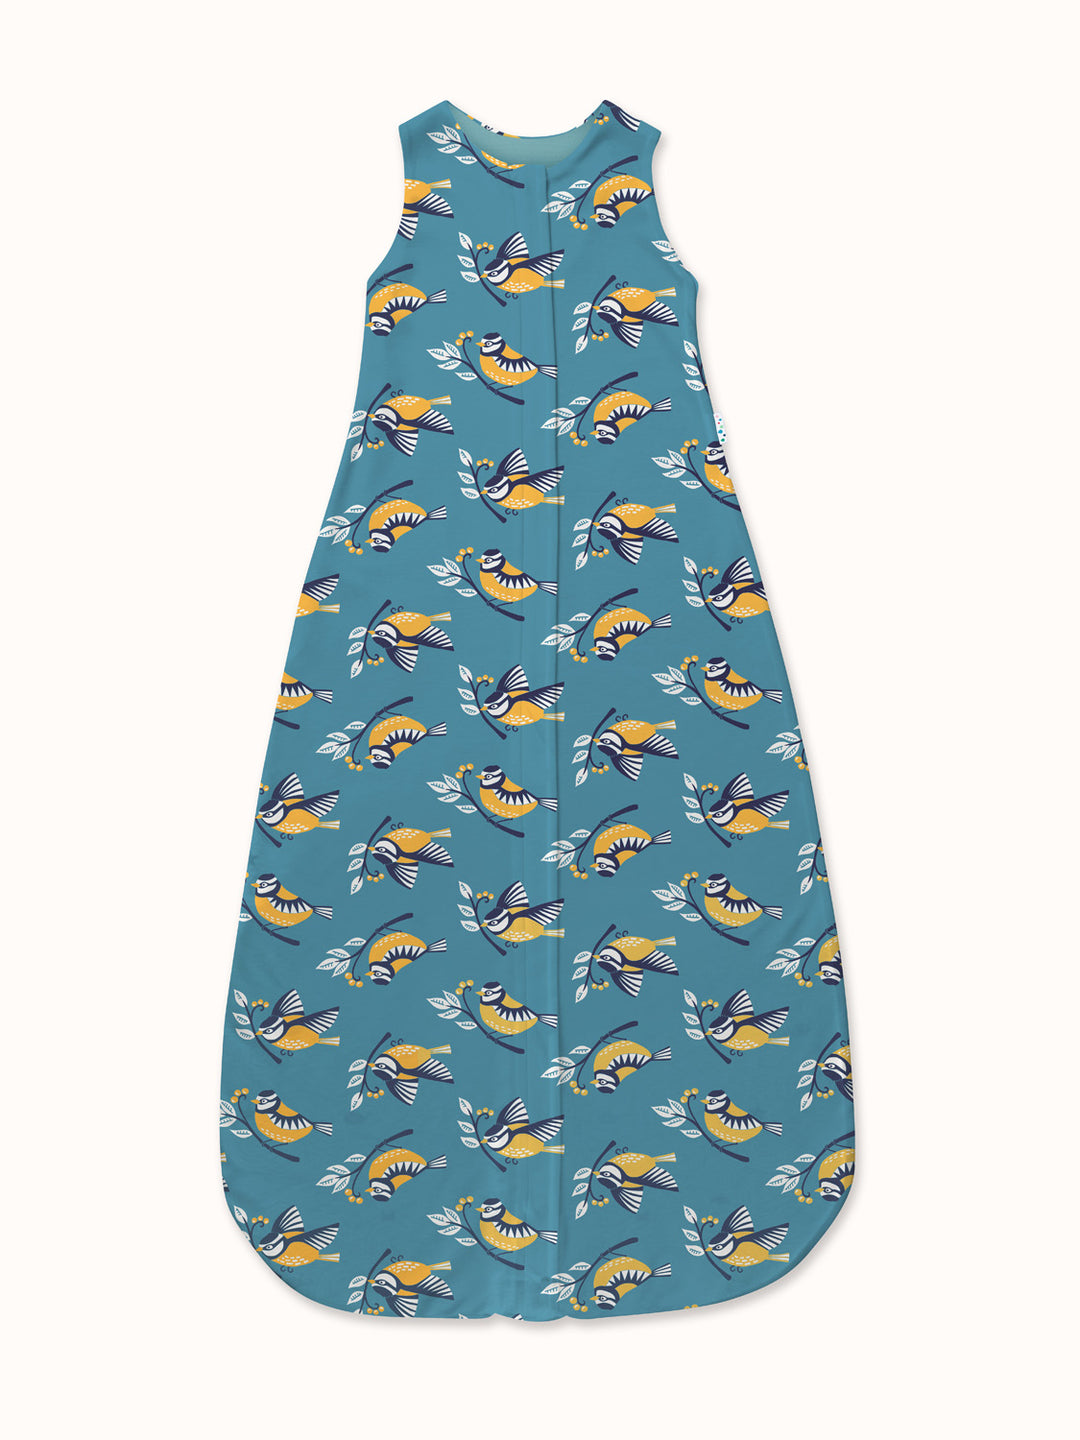 Merino Toddler Sleeping Bag by Superlove Merino bird #colour_blue-tit